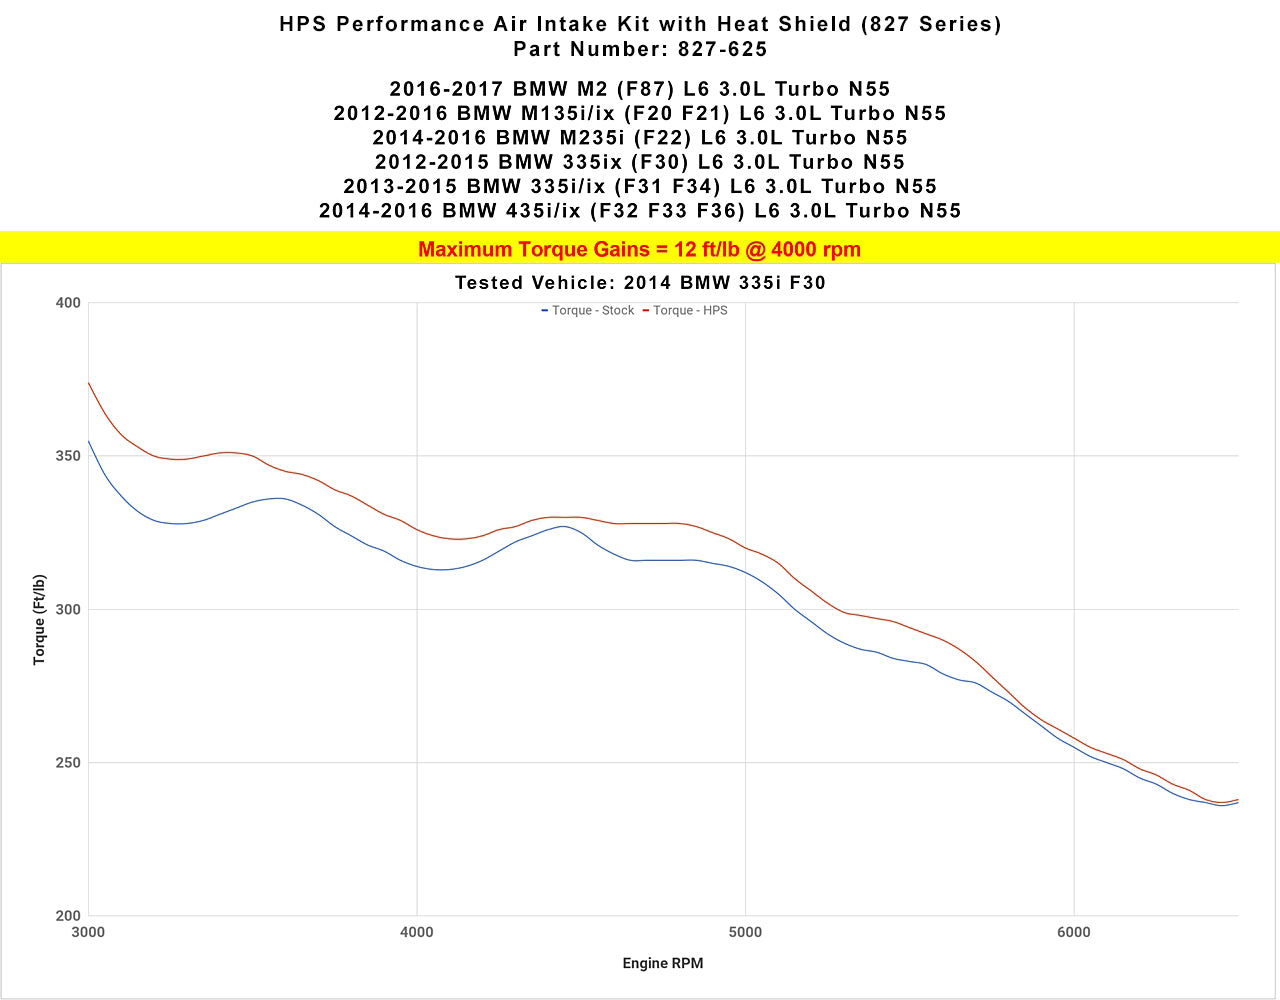 Dyno proven gains 12 ft/lb HPS Performance Shortram Air Intake Kit 2013-2015 BMW 335i 335ix F31 F34 3.0L Turbo N55 827-625WB